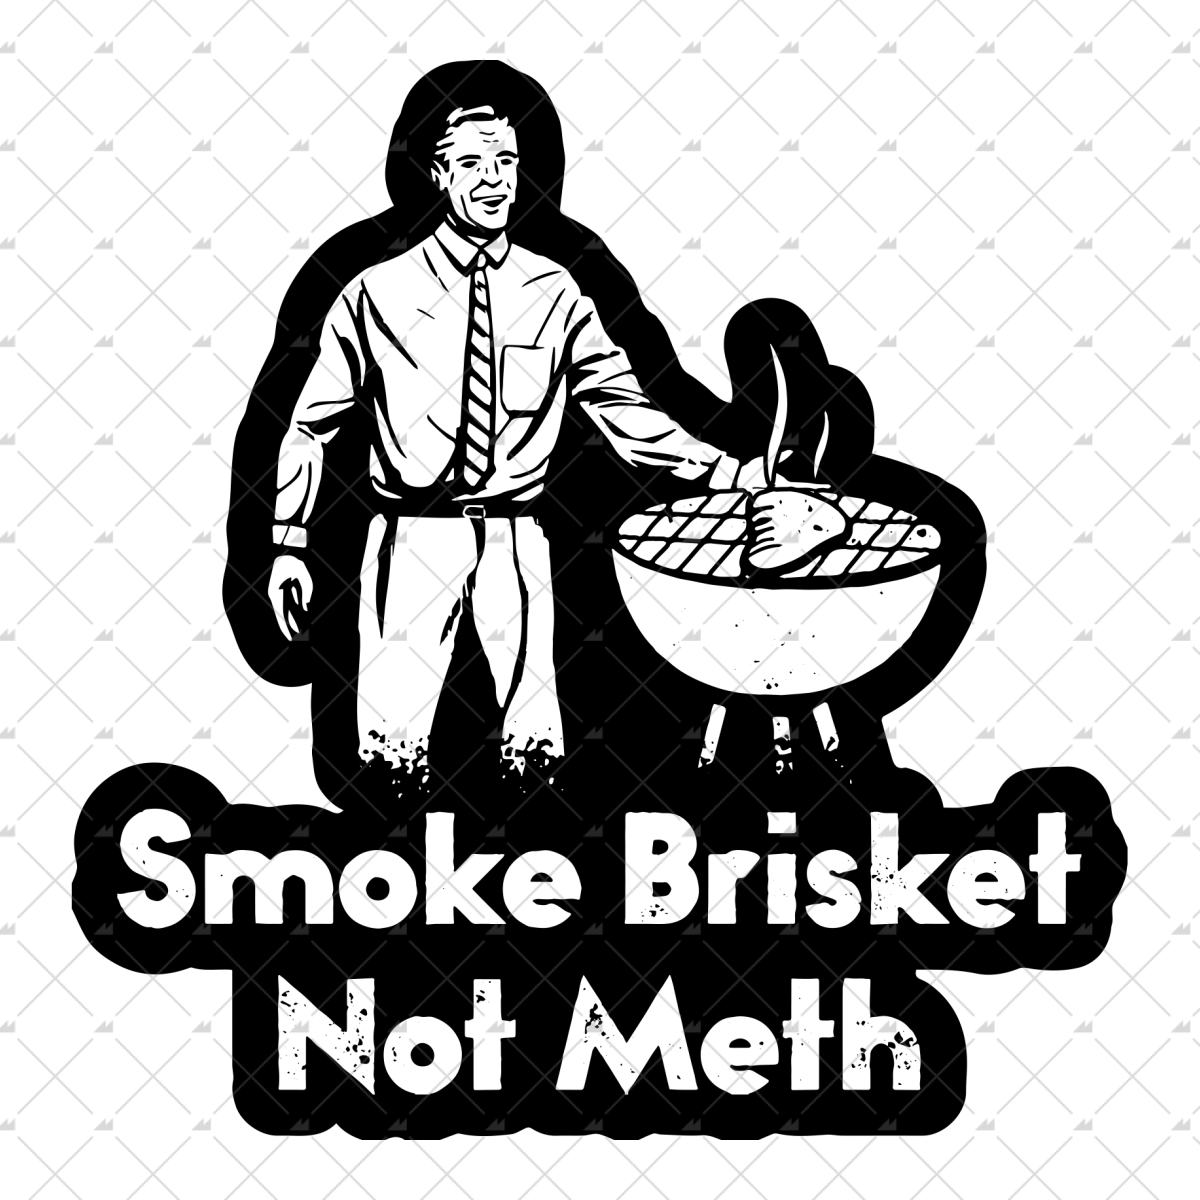 Smoke Brisket Not Meth - Sticker